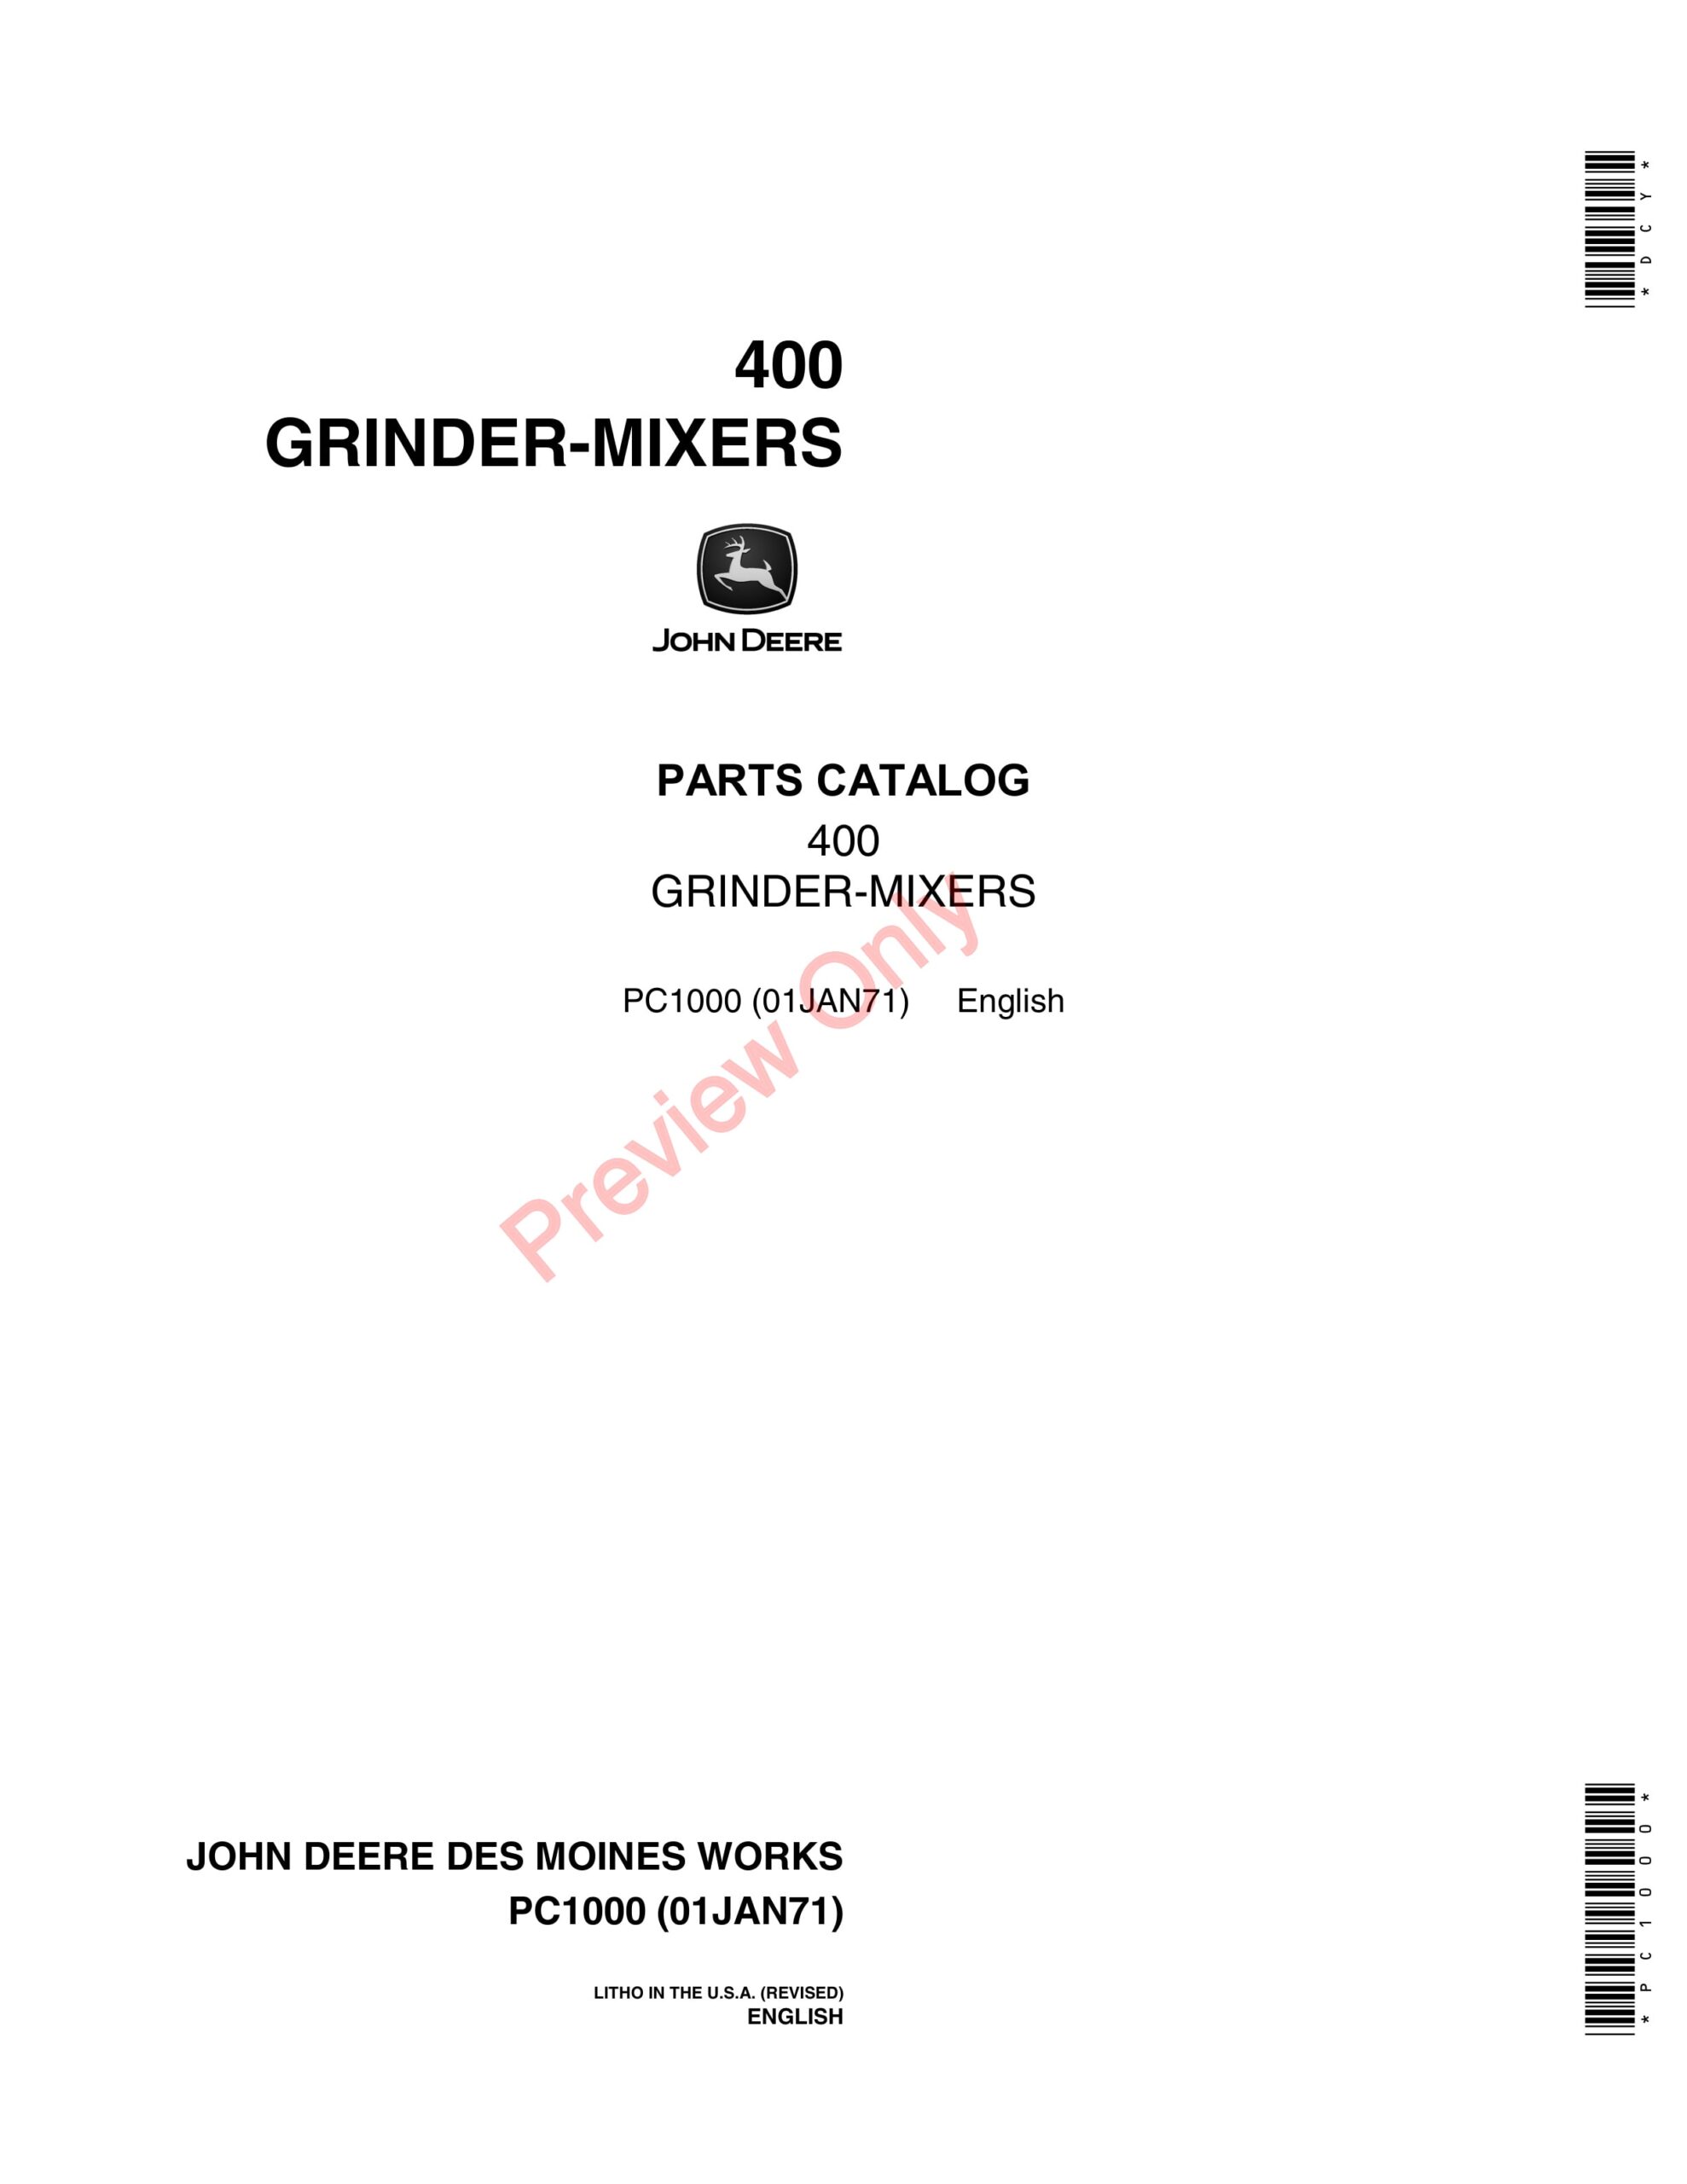 John Deere 400 Grinder-Mixers Parts Catalog PC1000 01JAN71-1